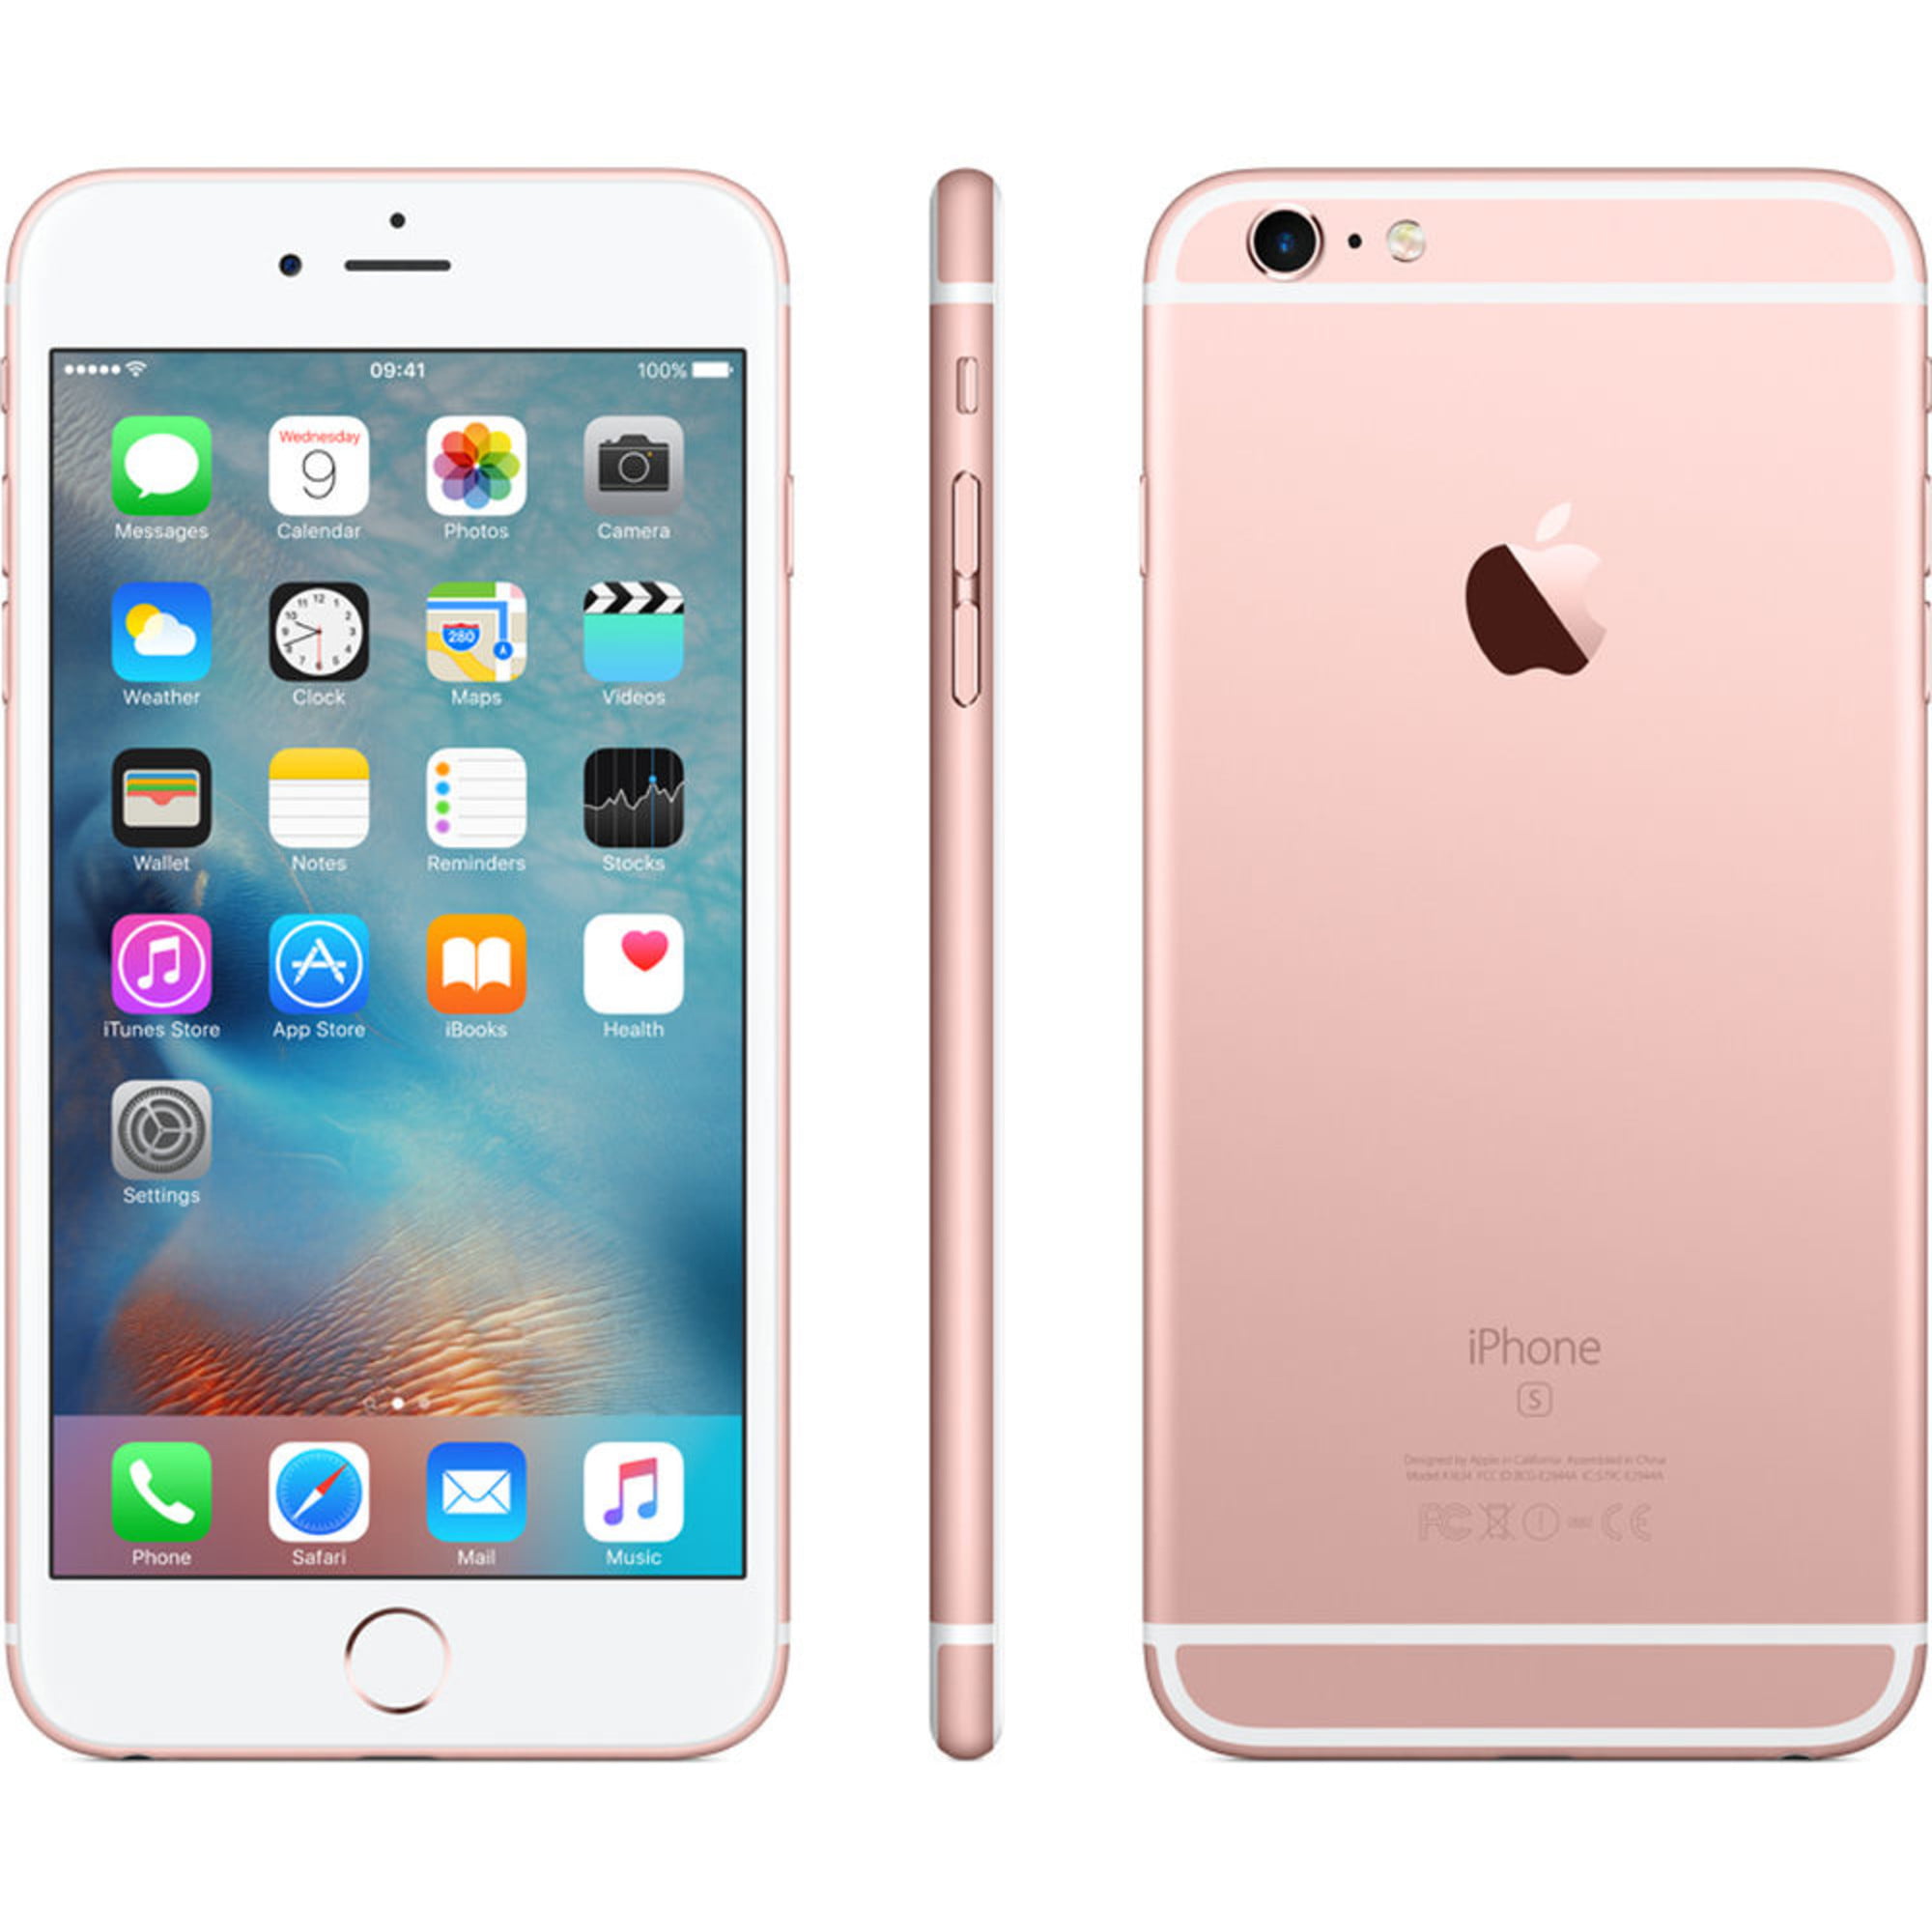 Apple iPhone 6s Plus 16GB GSM Unlocked Phone - Rose Gold + WeCare Sanitary Keychain - Walmart.com